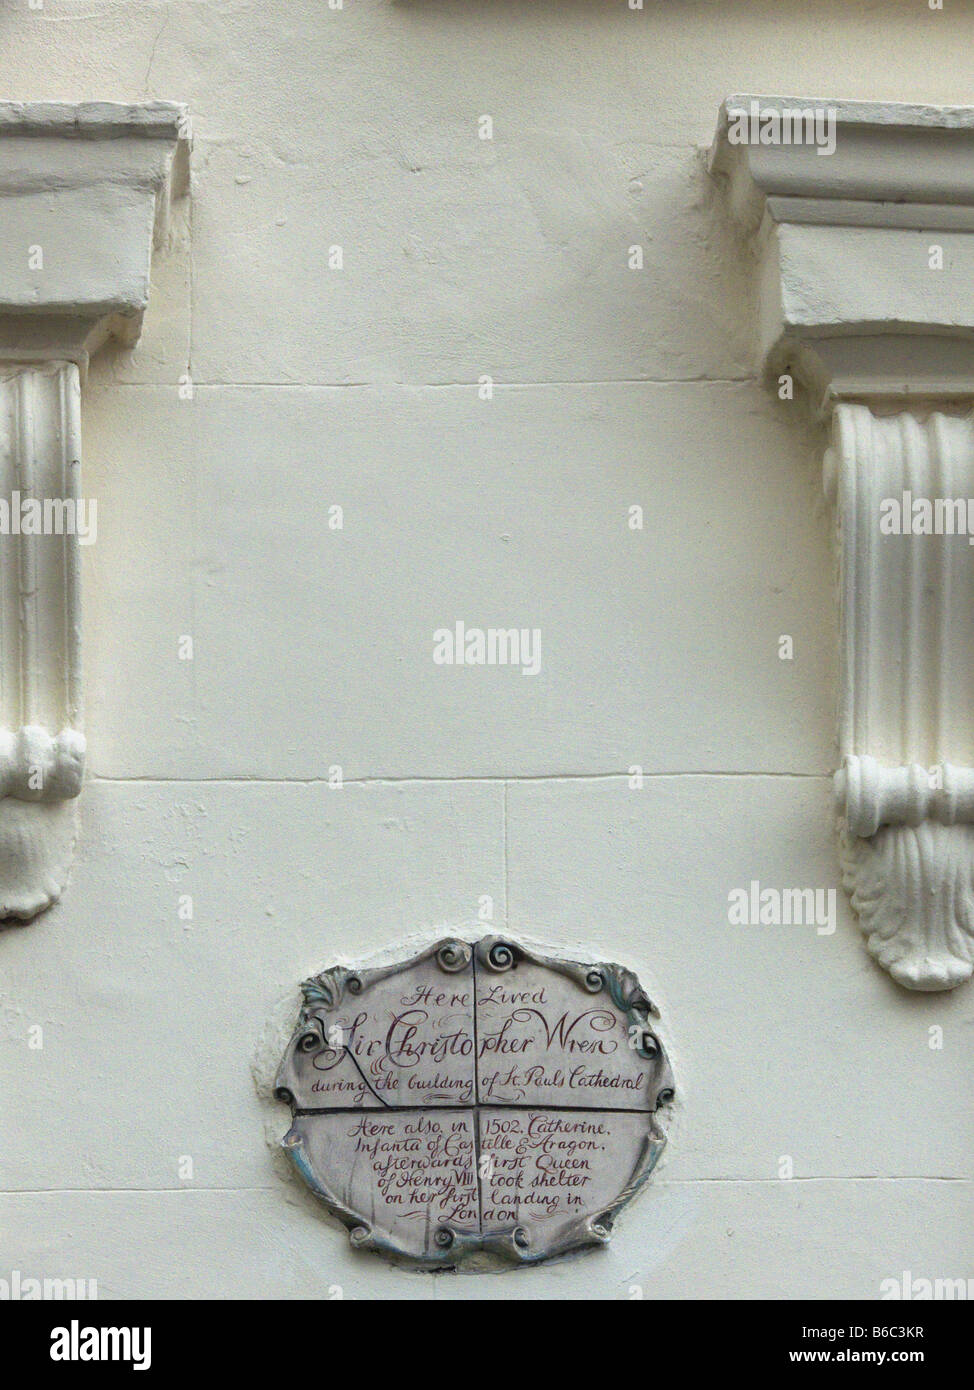 La placca sul muro di Sir Christopher Wren's ex casa a Cardinali Wharf, South Bank di Londra, Inghilterra. Foto Stock